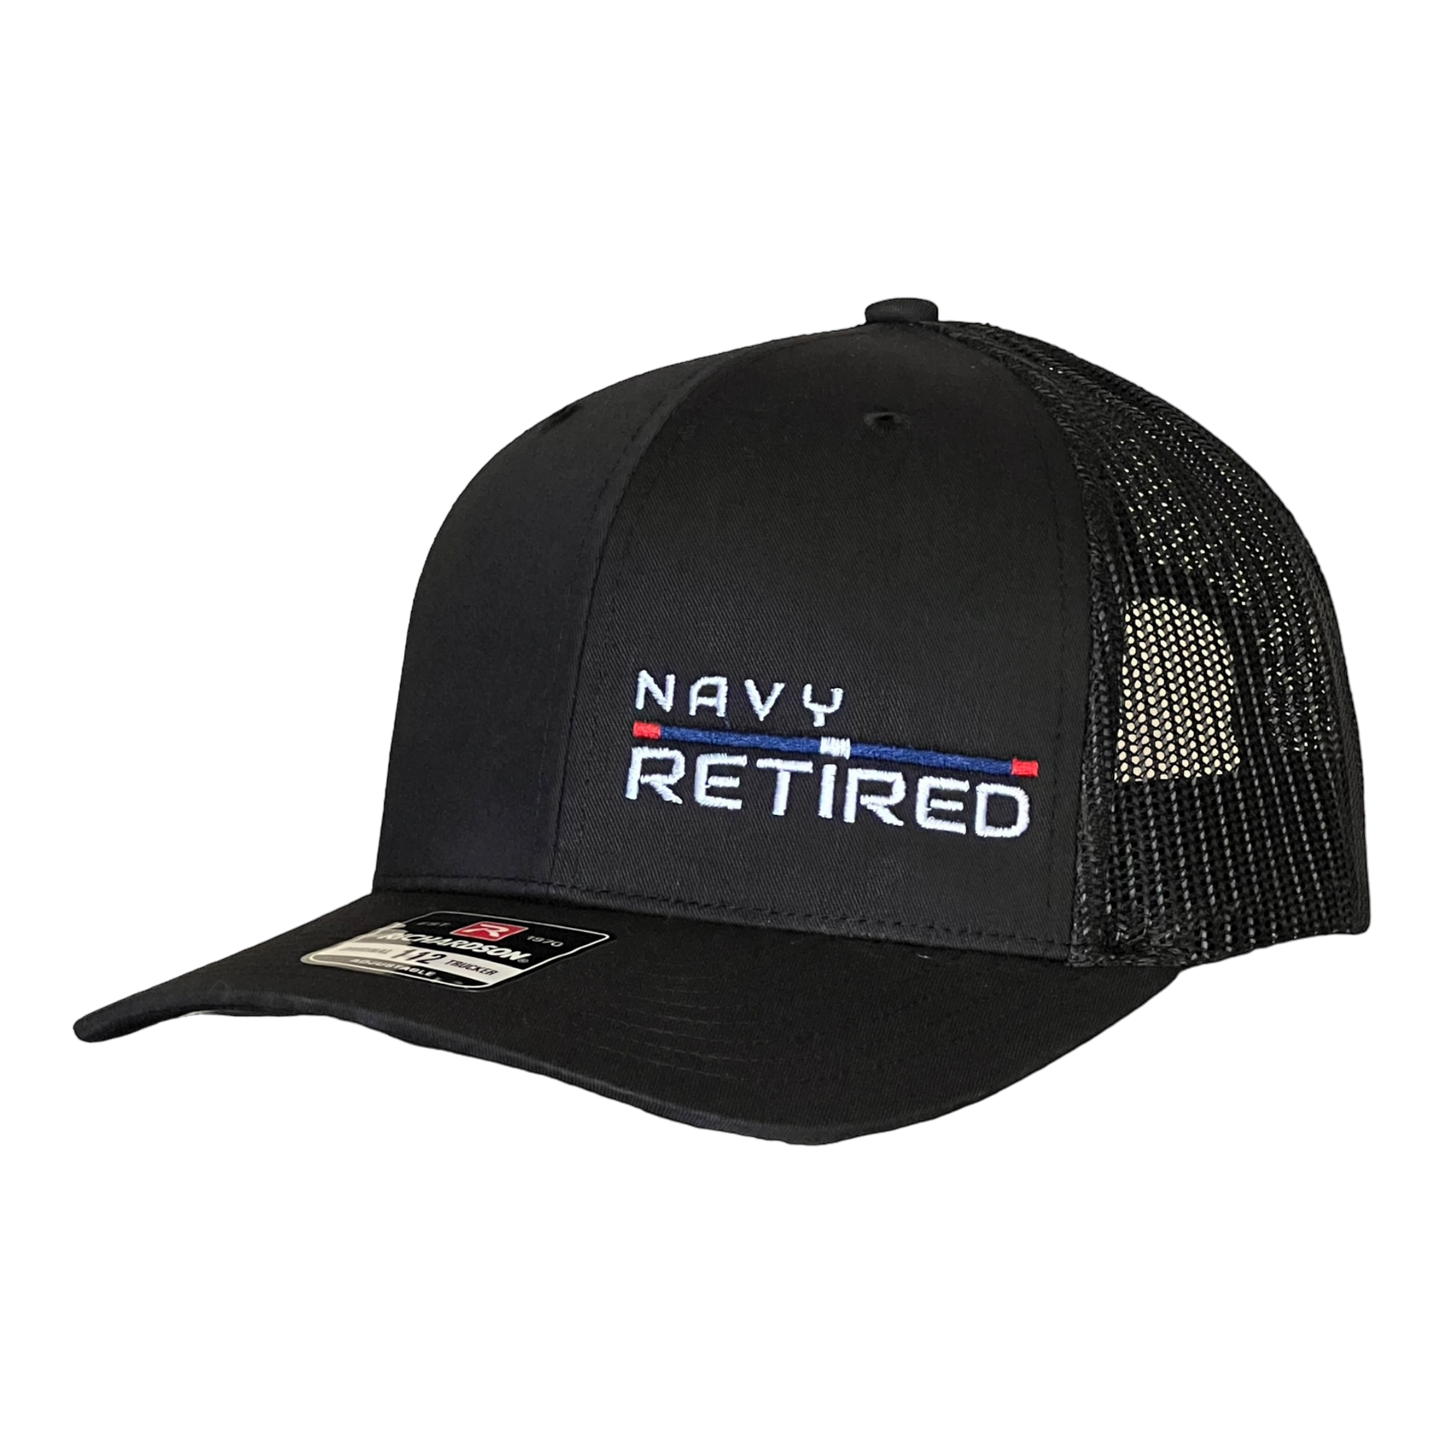 Navy Retired